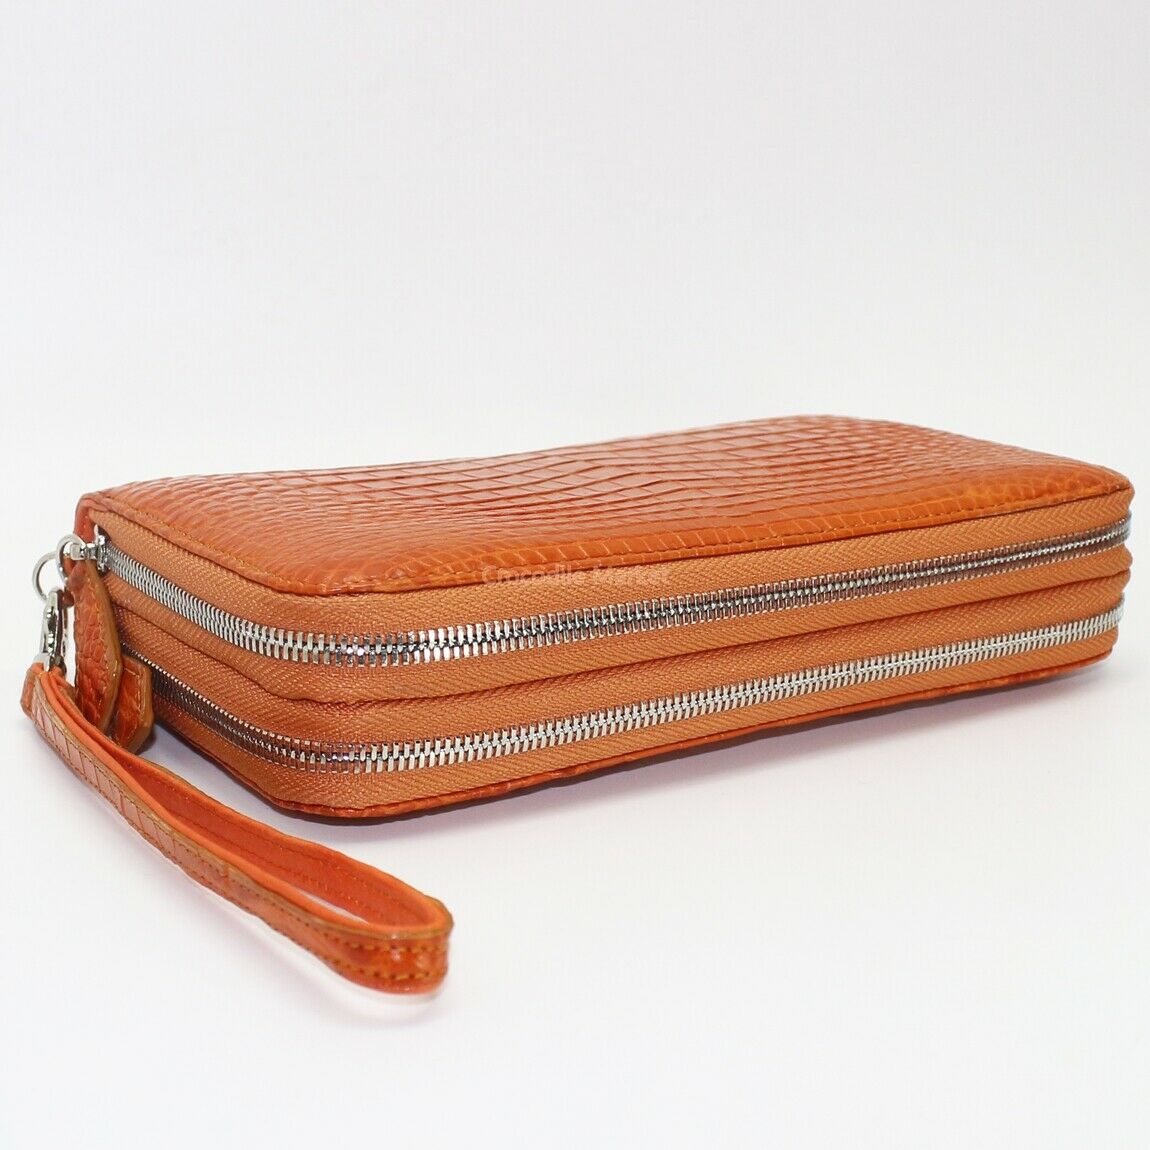 Genuine Leather Crocodile Skin Long Wallet 2 Zip-Around Clutch Handbag, Orange